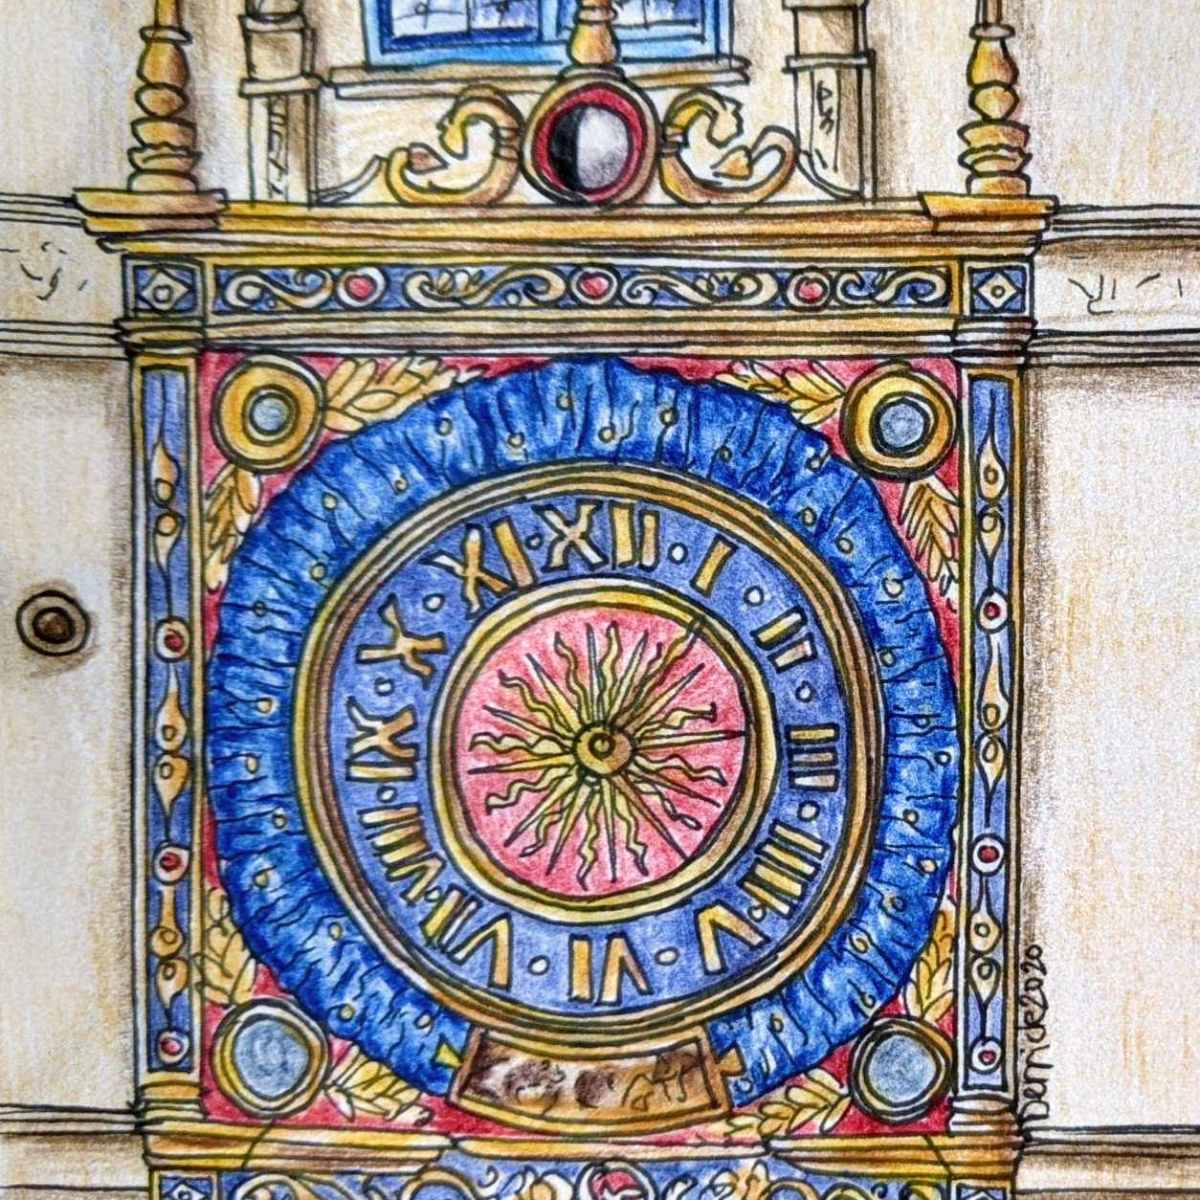 Le Gros Horloge – The Medieval Astronomical Clock Of Rouen